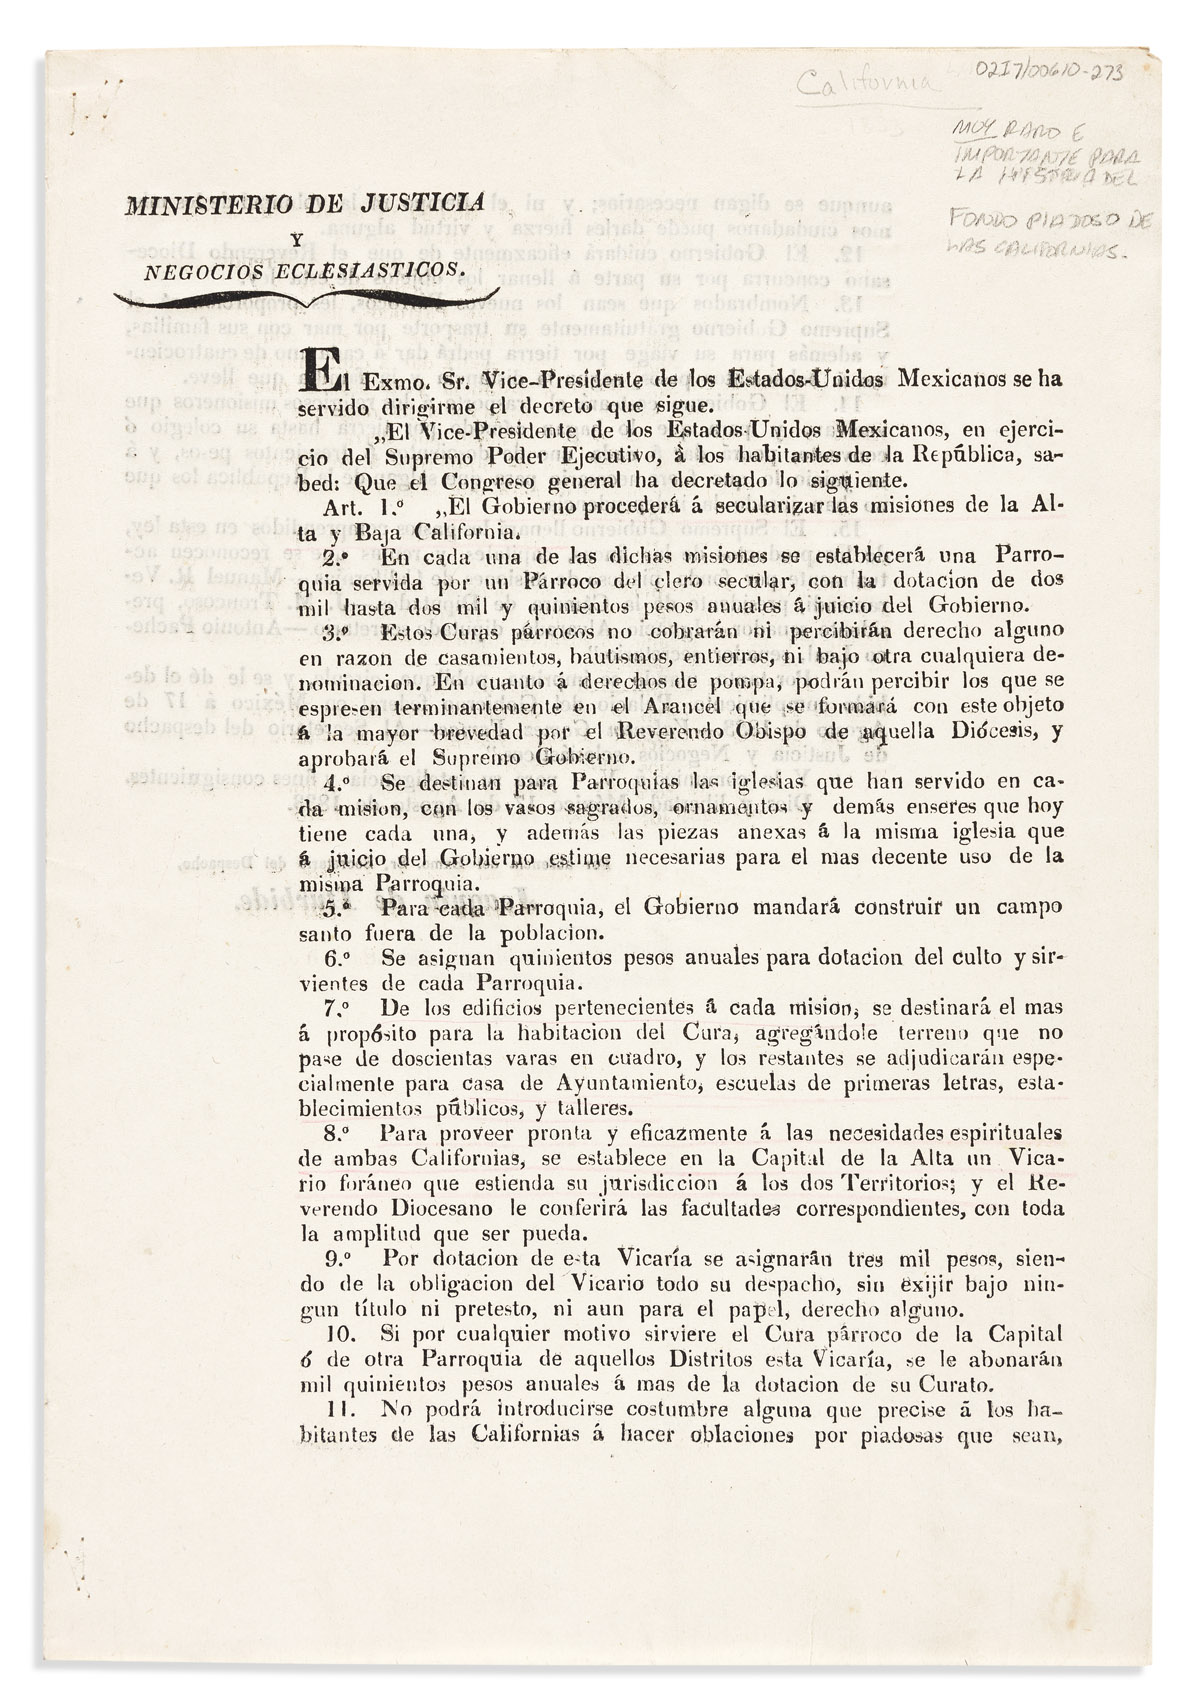 (CALIFORNIA.) Valentín Gómez Farías. Order to secularize the missions of Alta and Baja California.